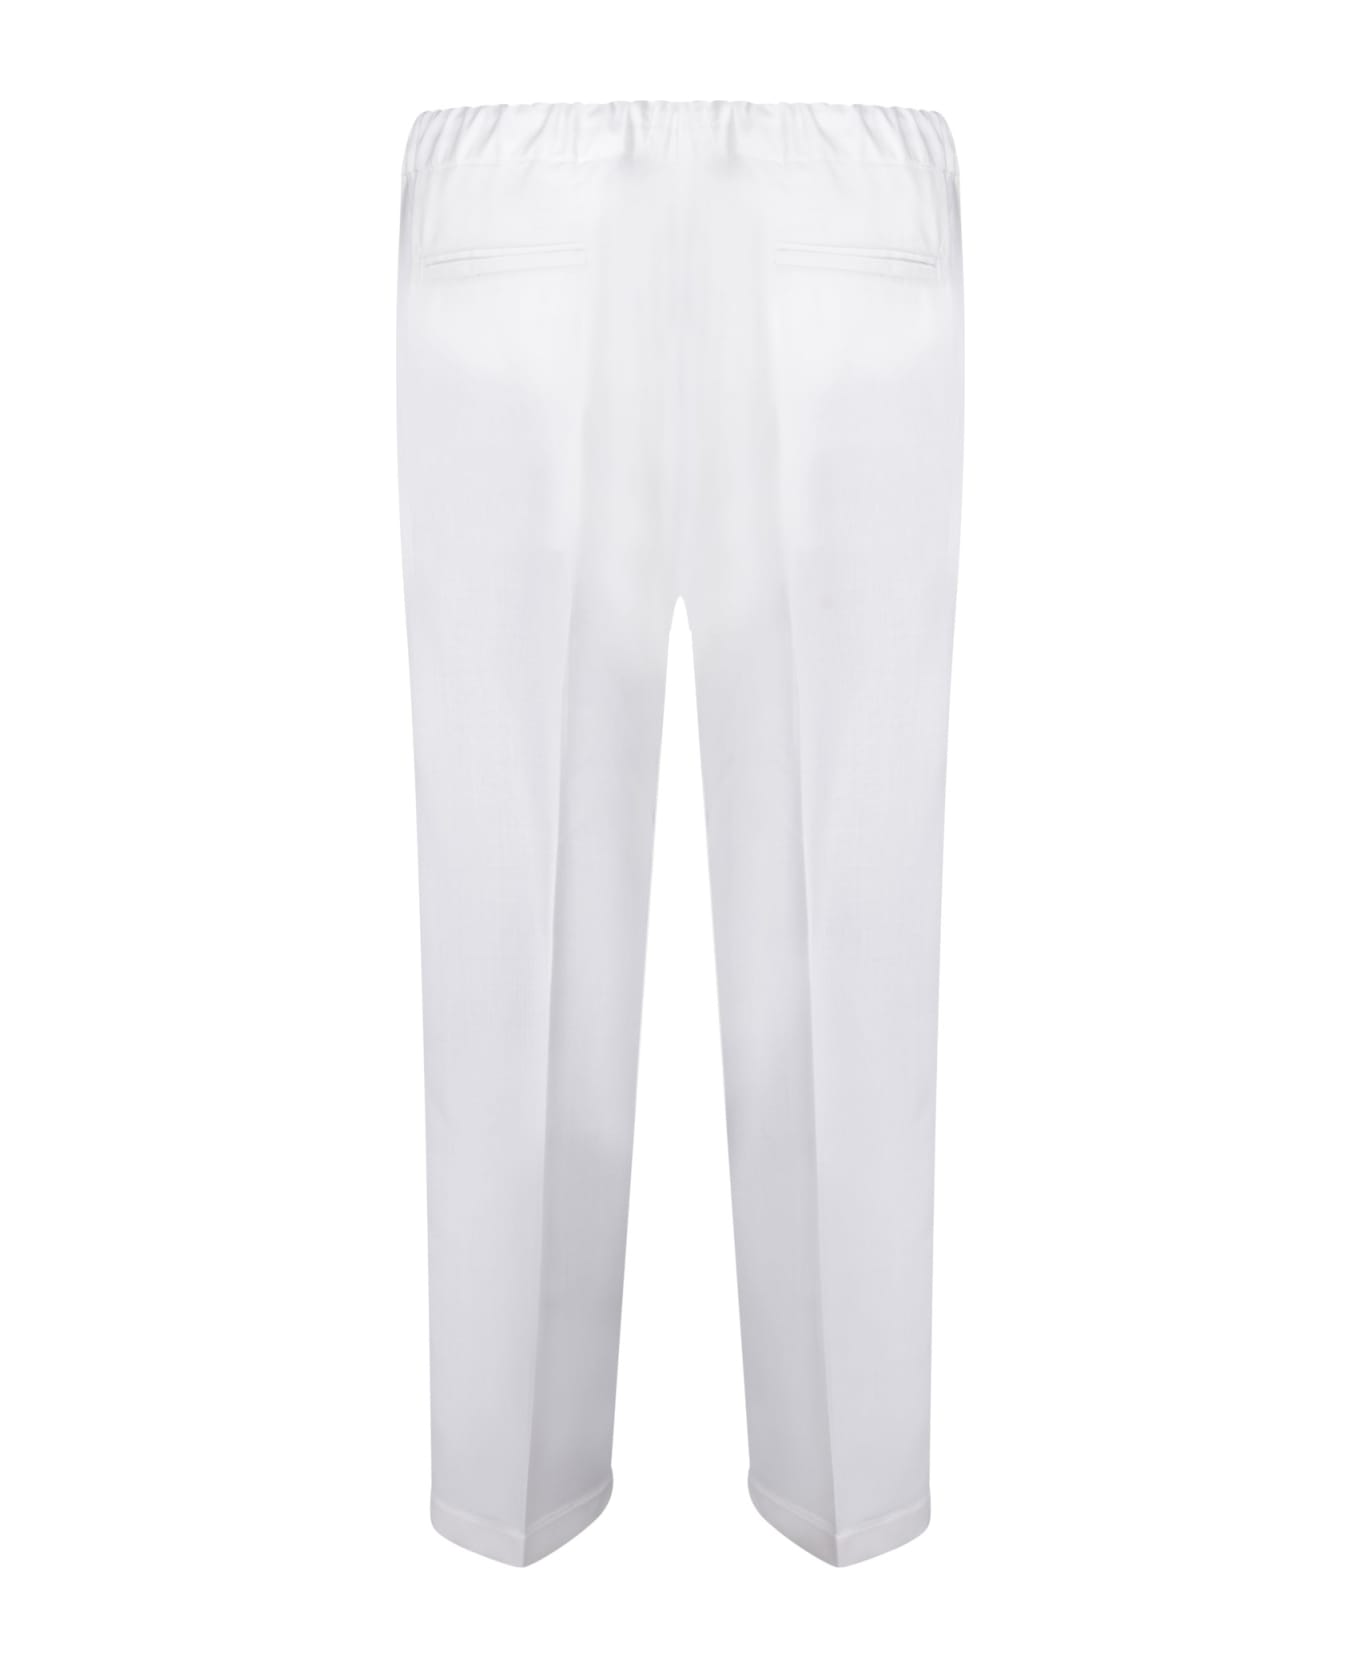 costumein Jean19 White Trousers - White